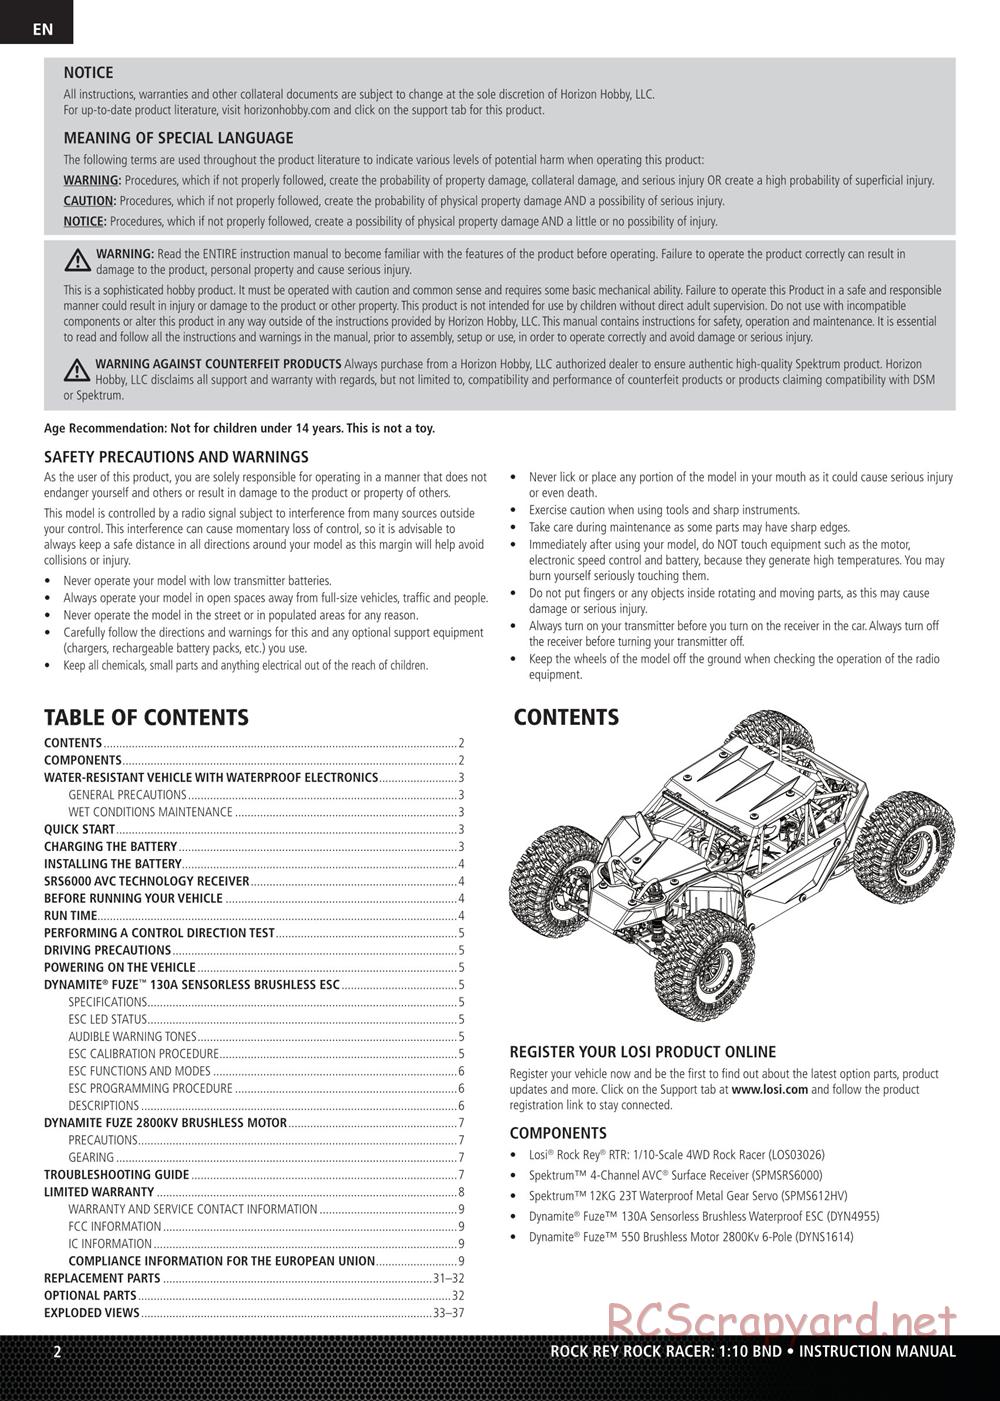 Team Losi - Rock Rey - Rock Racer BND - Manual - Page 2